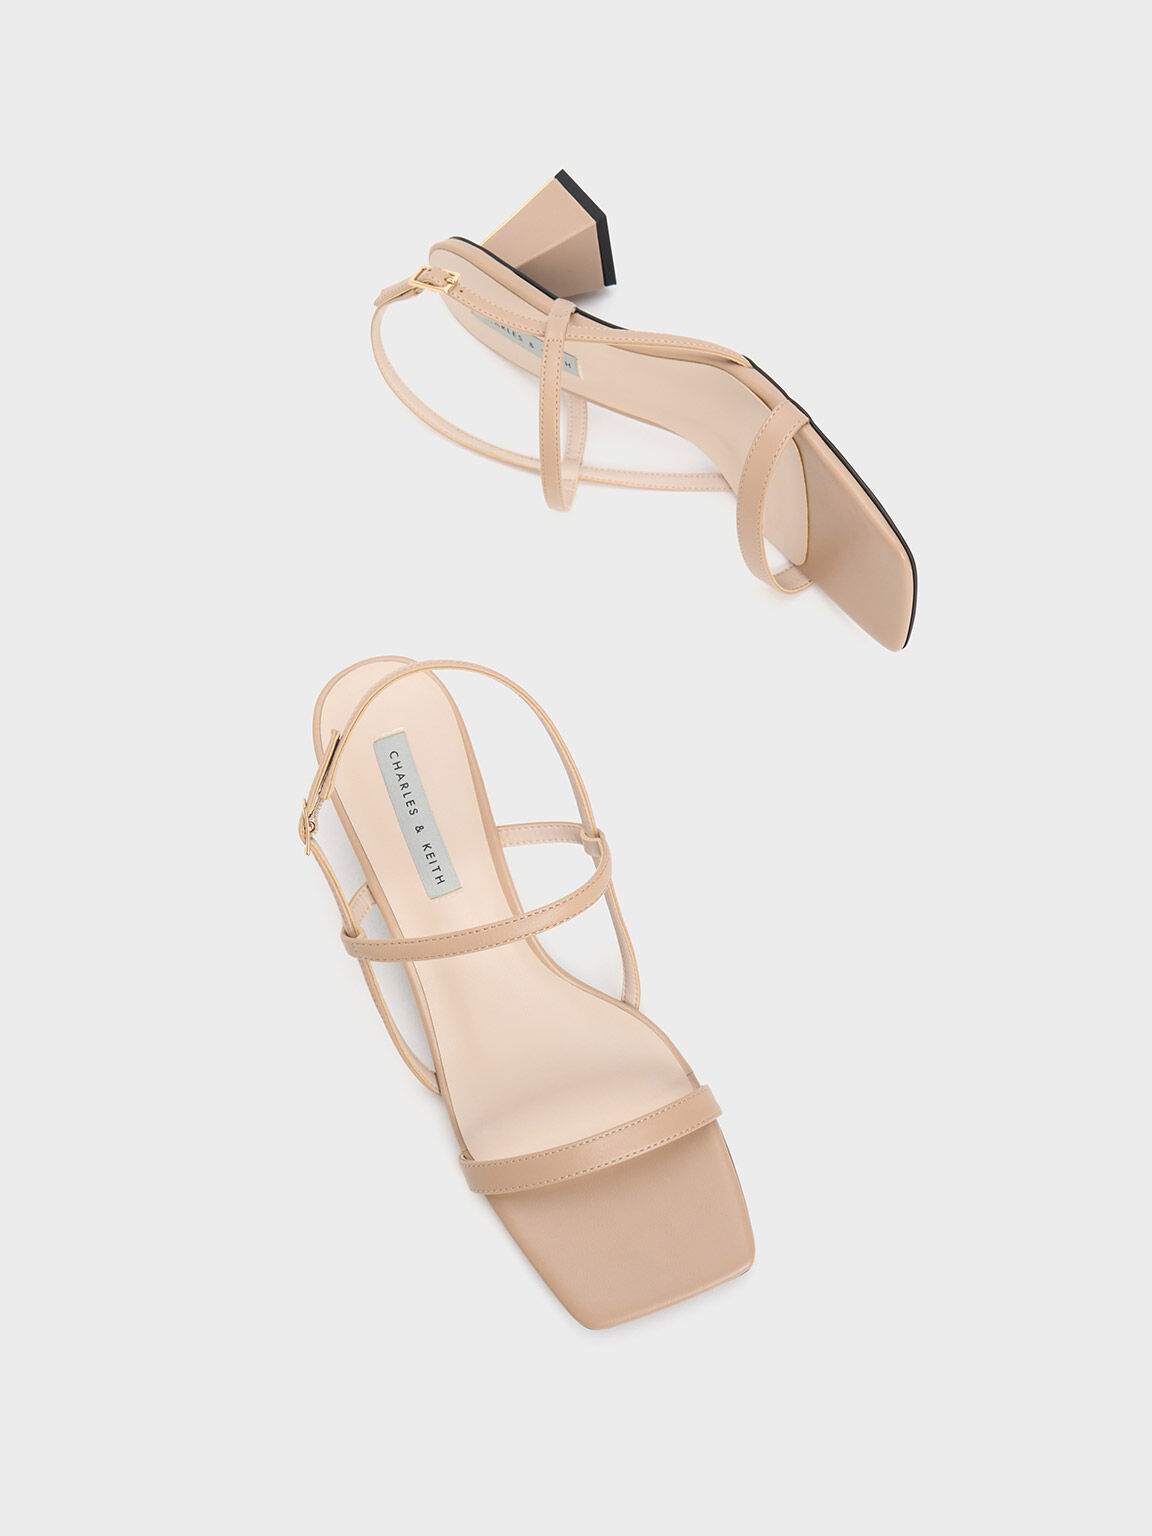 Square-Toe Strappy Sandals, Beige, hi-res